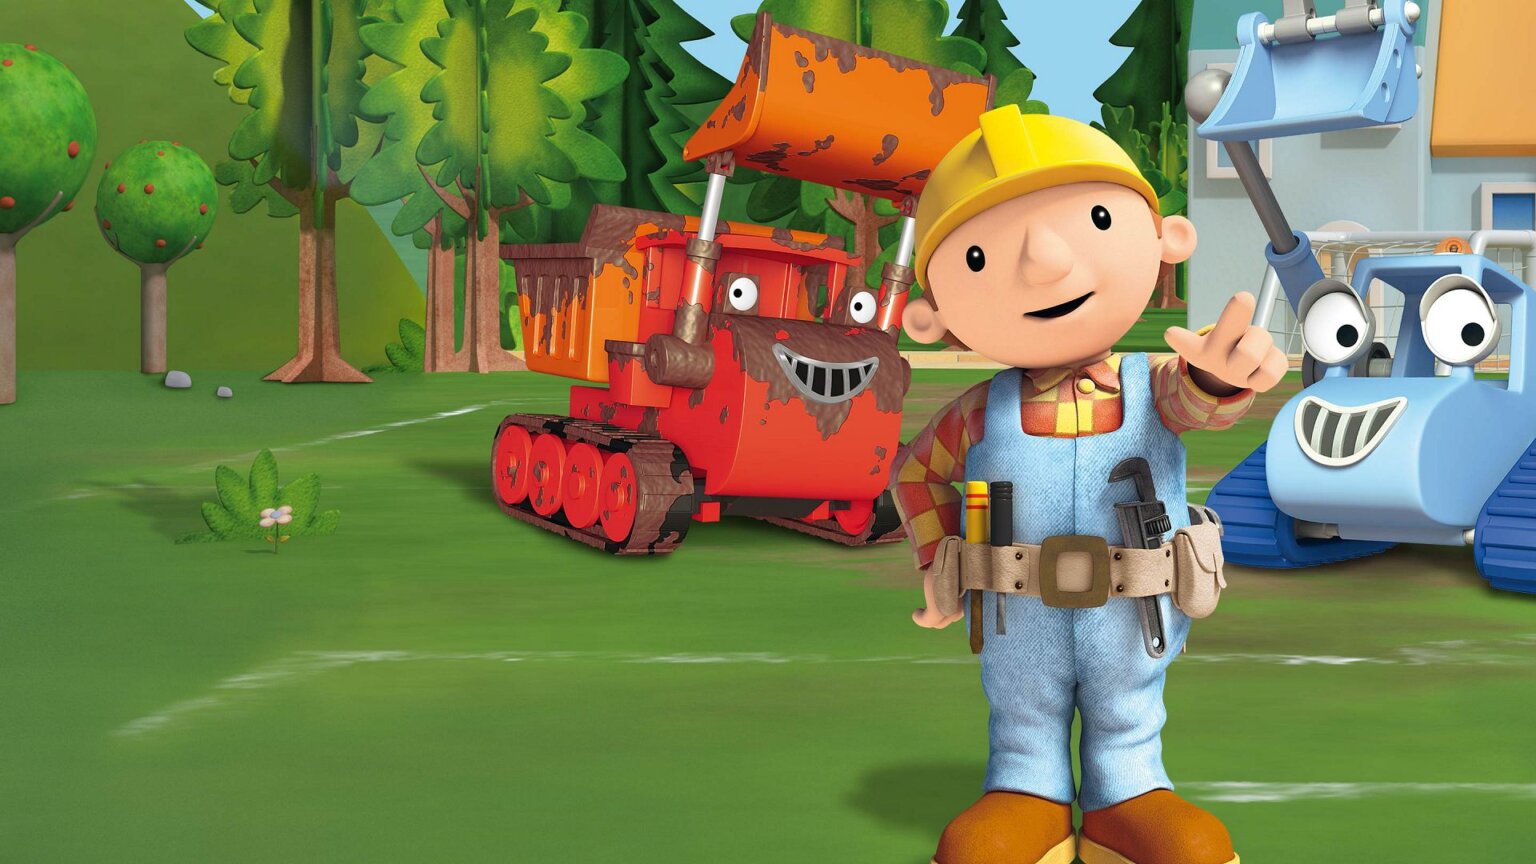 Bob the Builder. 